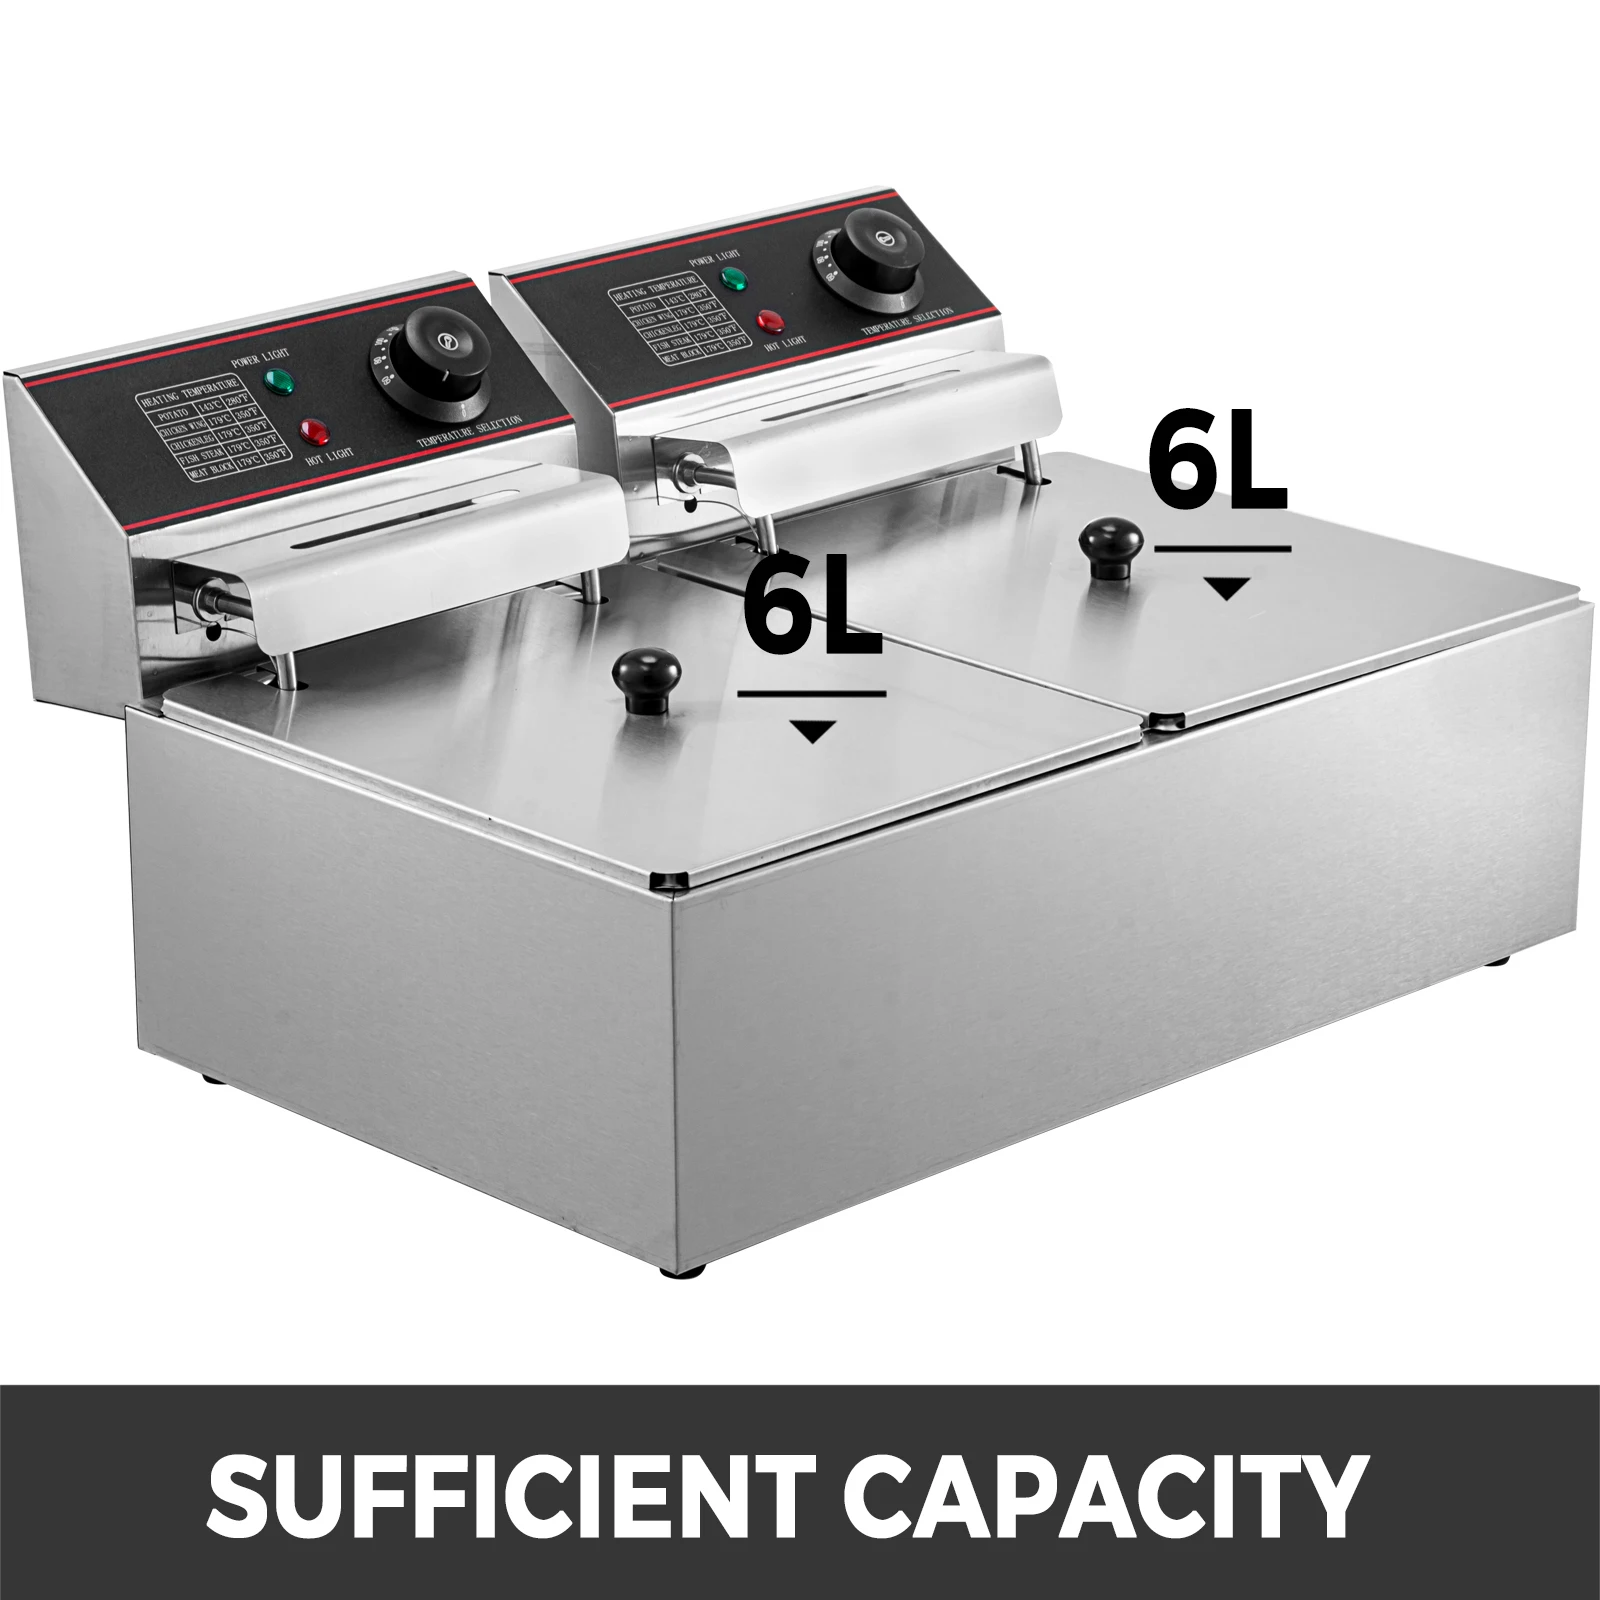 12L 5000W Electric Deep Fryers Dual Tanks with Dual Basket & Lid Double Deep Fat Fryer Adjustable Temperature Control